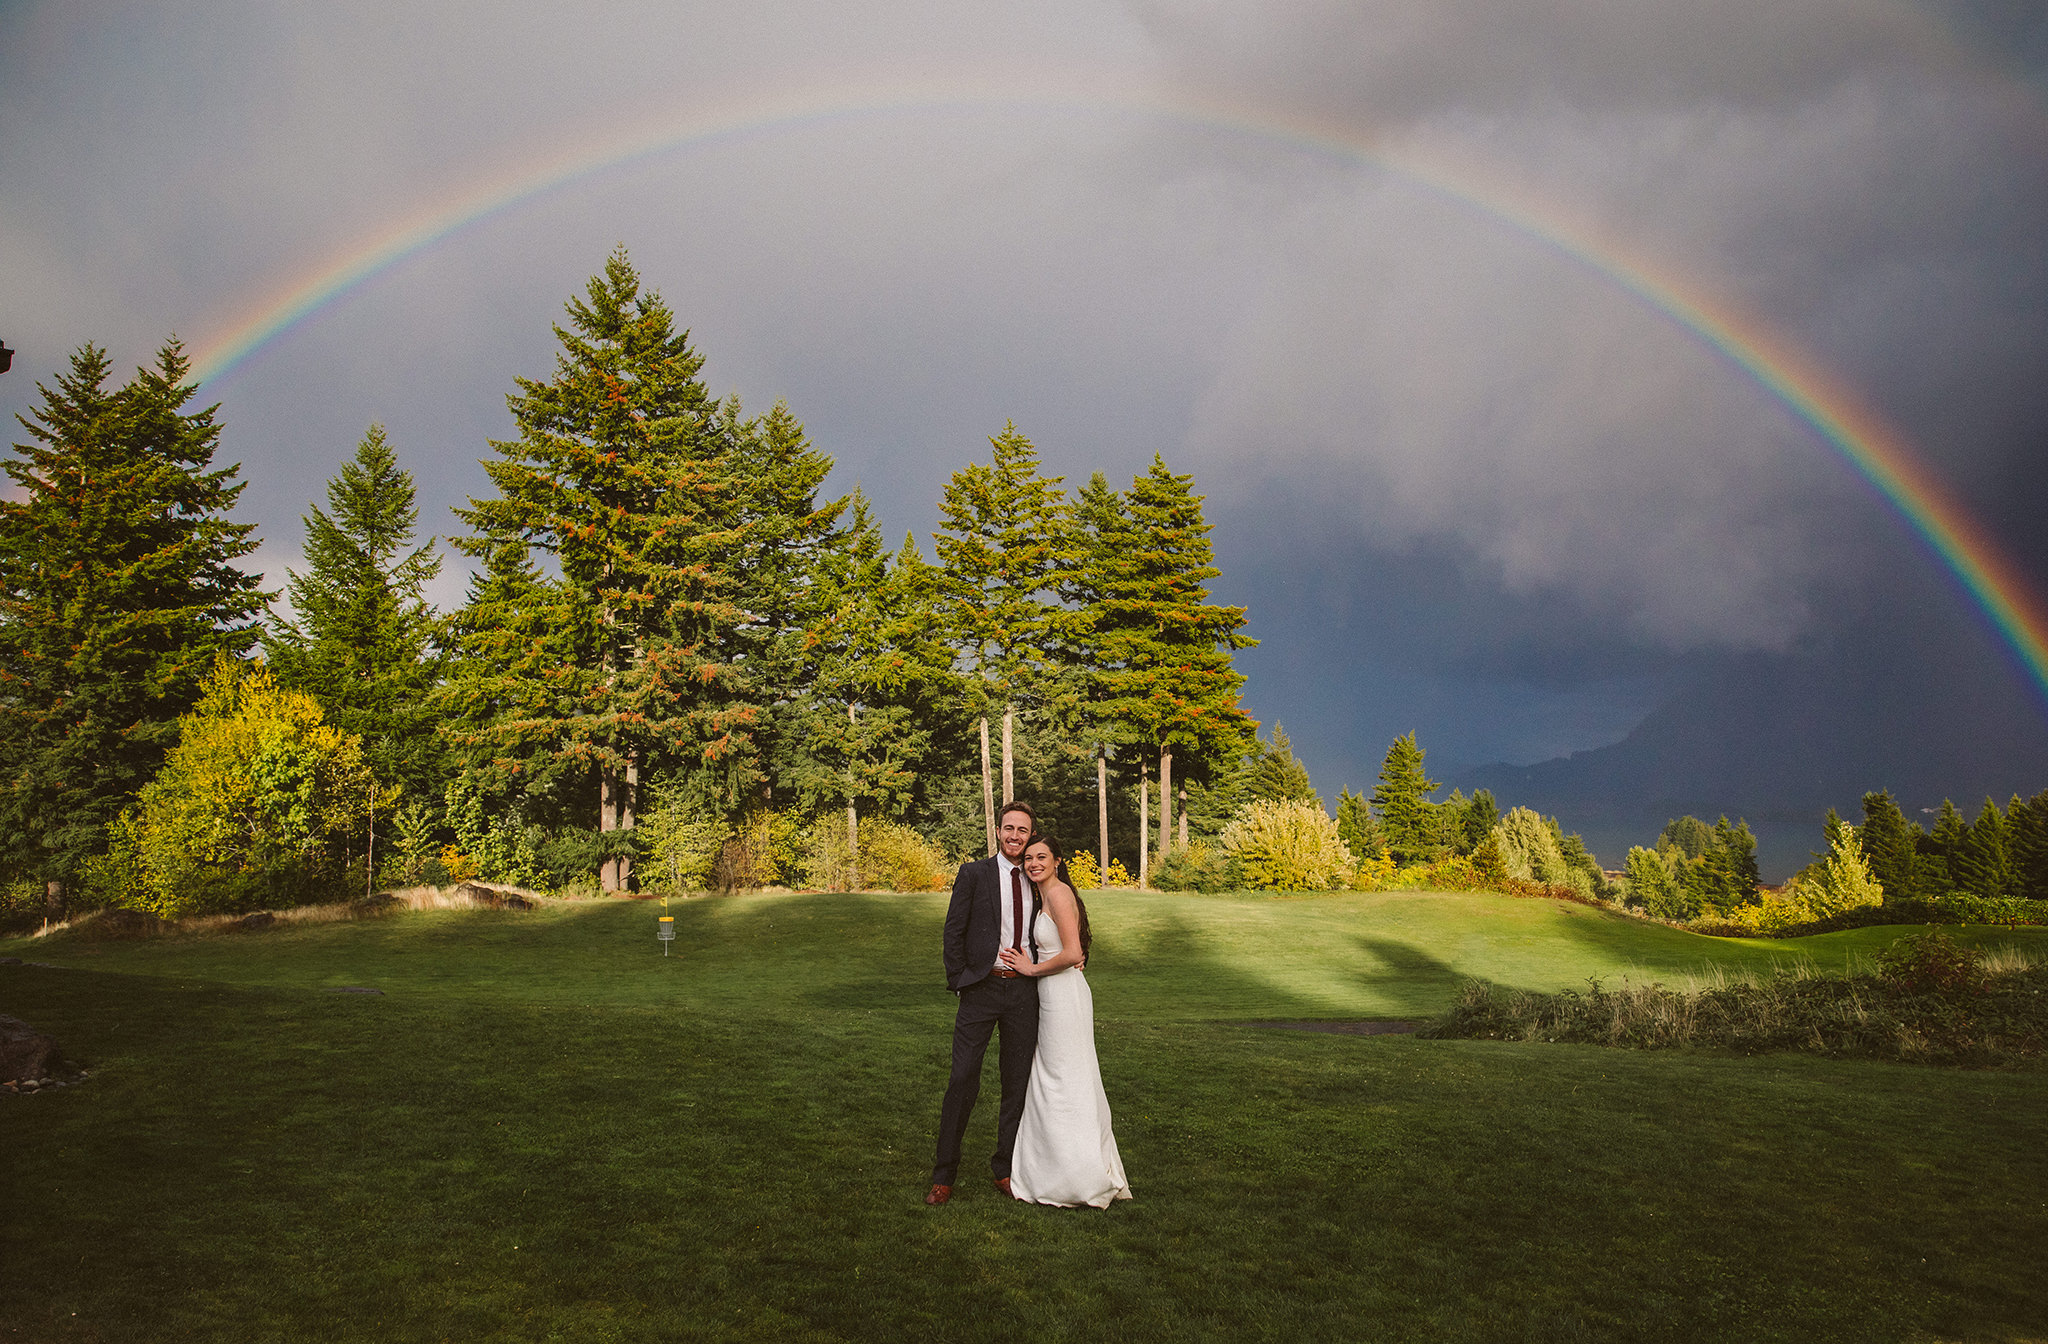 A wedding photo under a rainbow at Skamania Lodge Resort